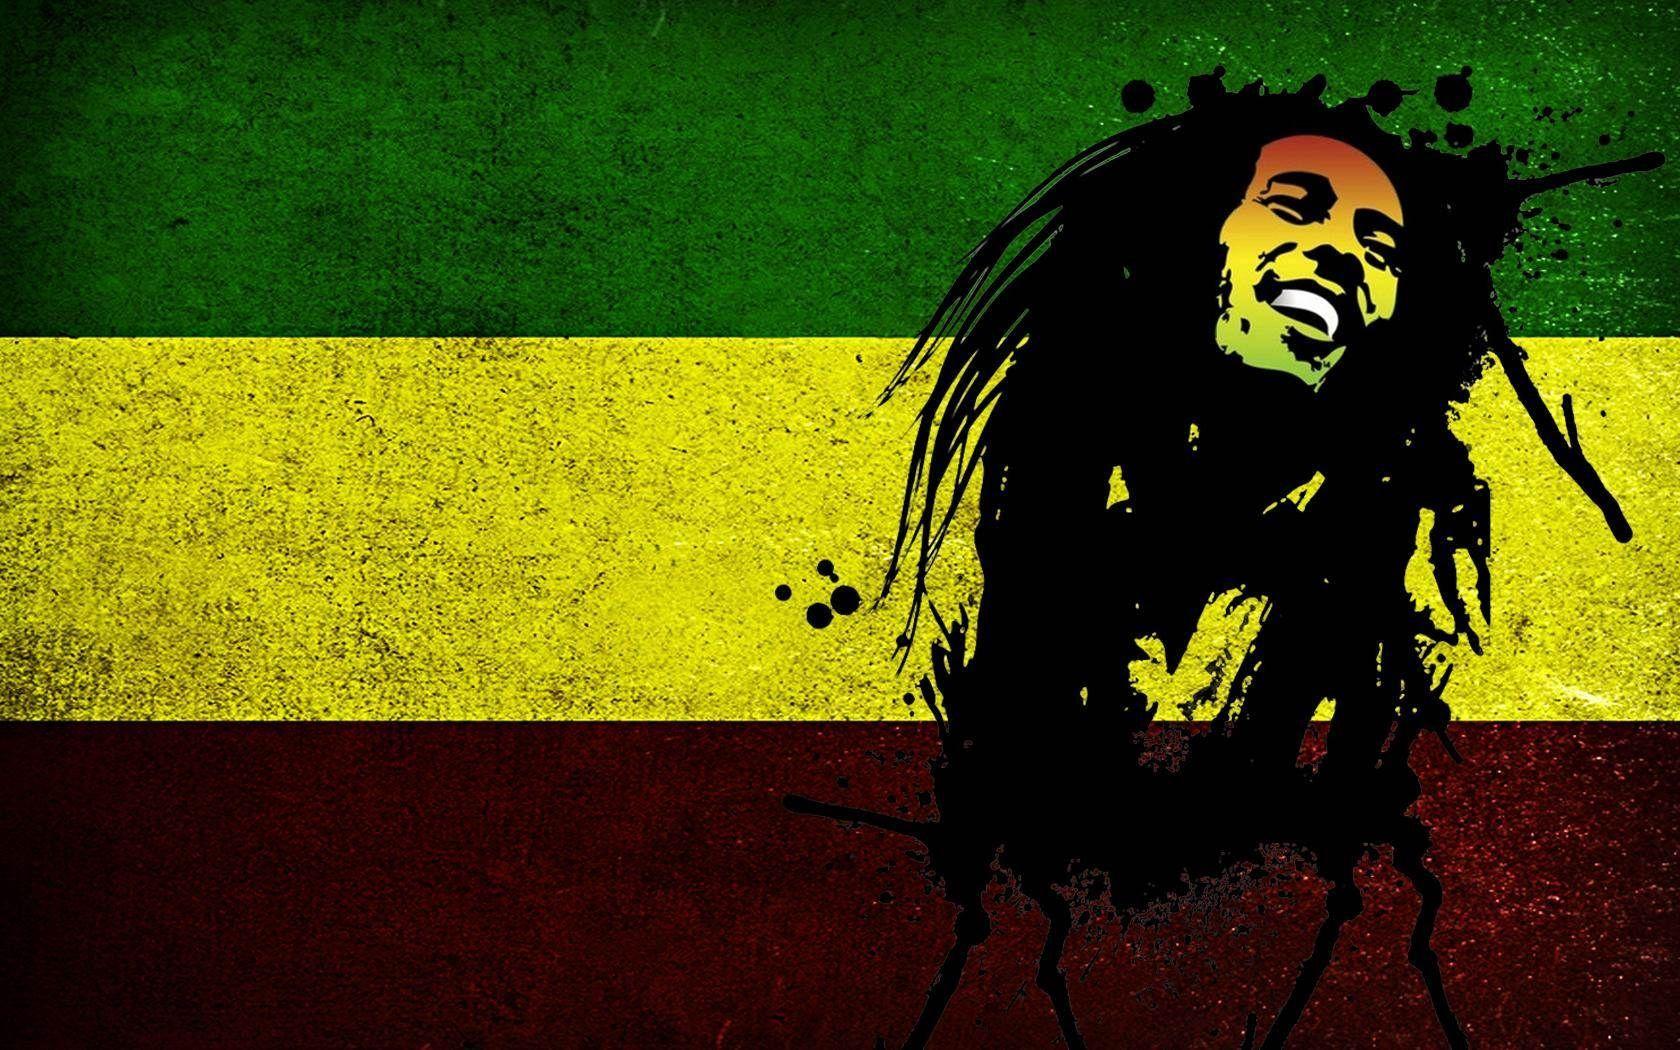 Reggae Wallpaper Google Play Store revenue \uamp; download estimates